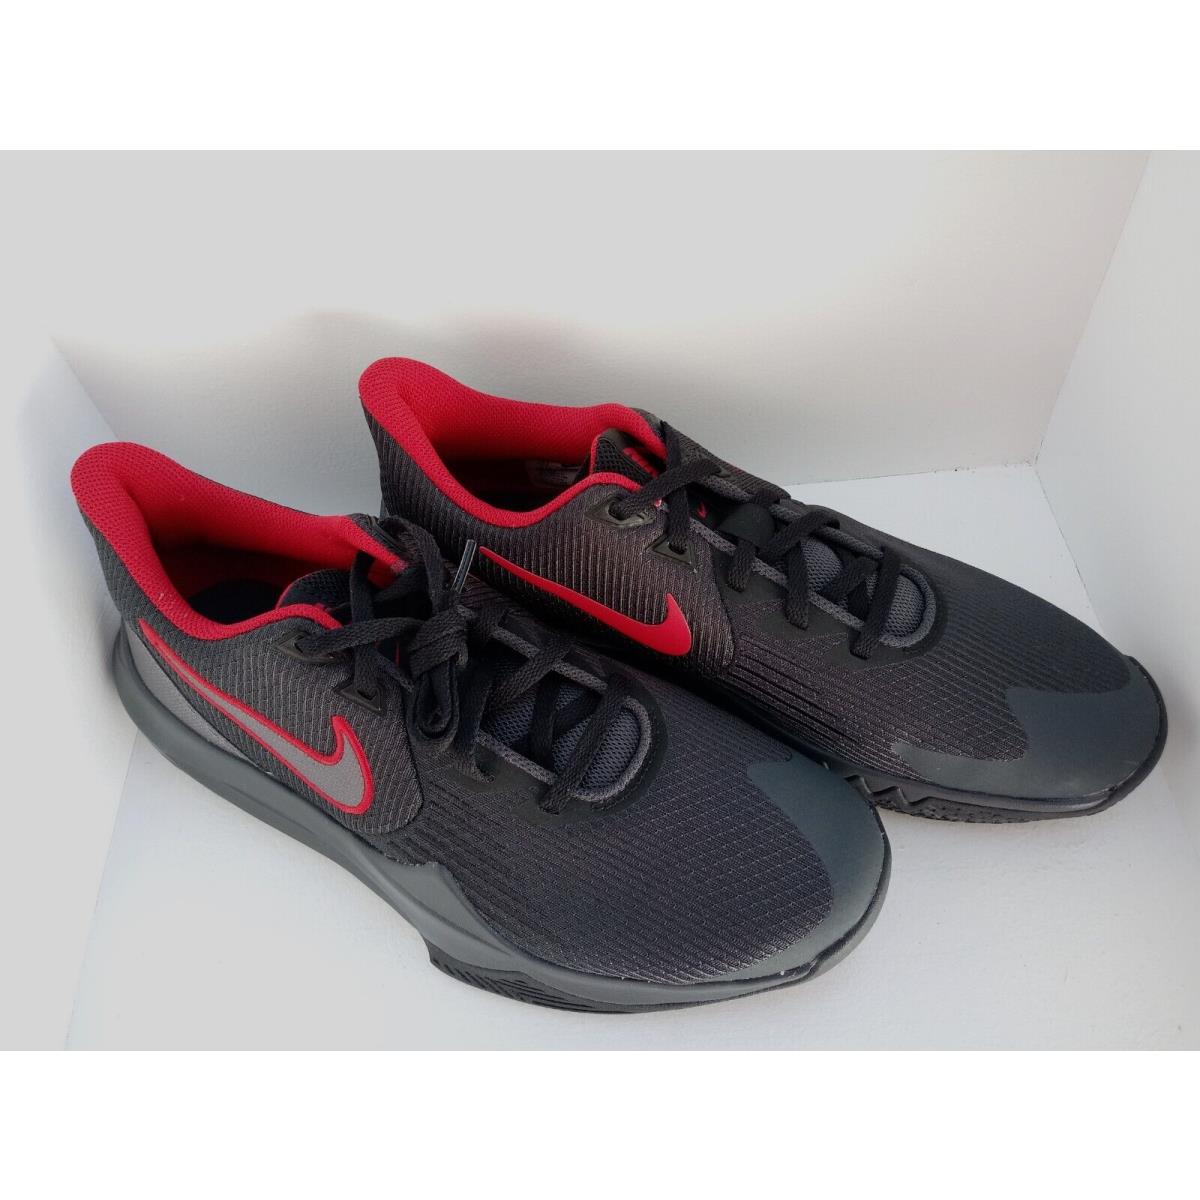 Nike shoes Precision - ANTHRACITE/MTLC DARK GREY 8